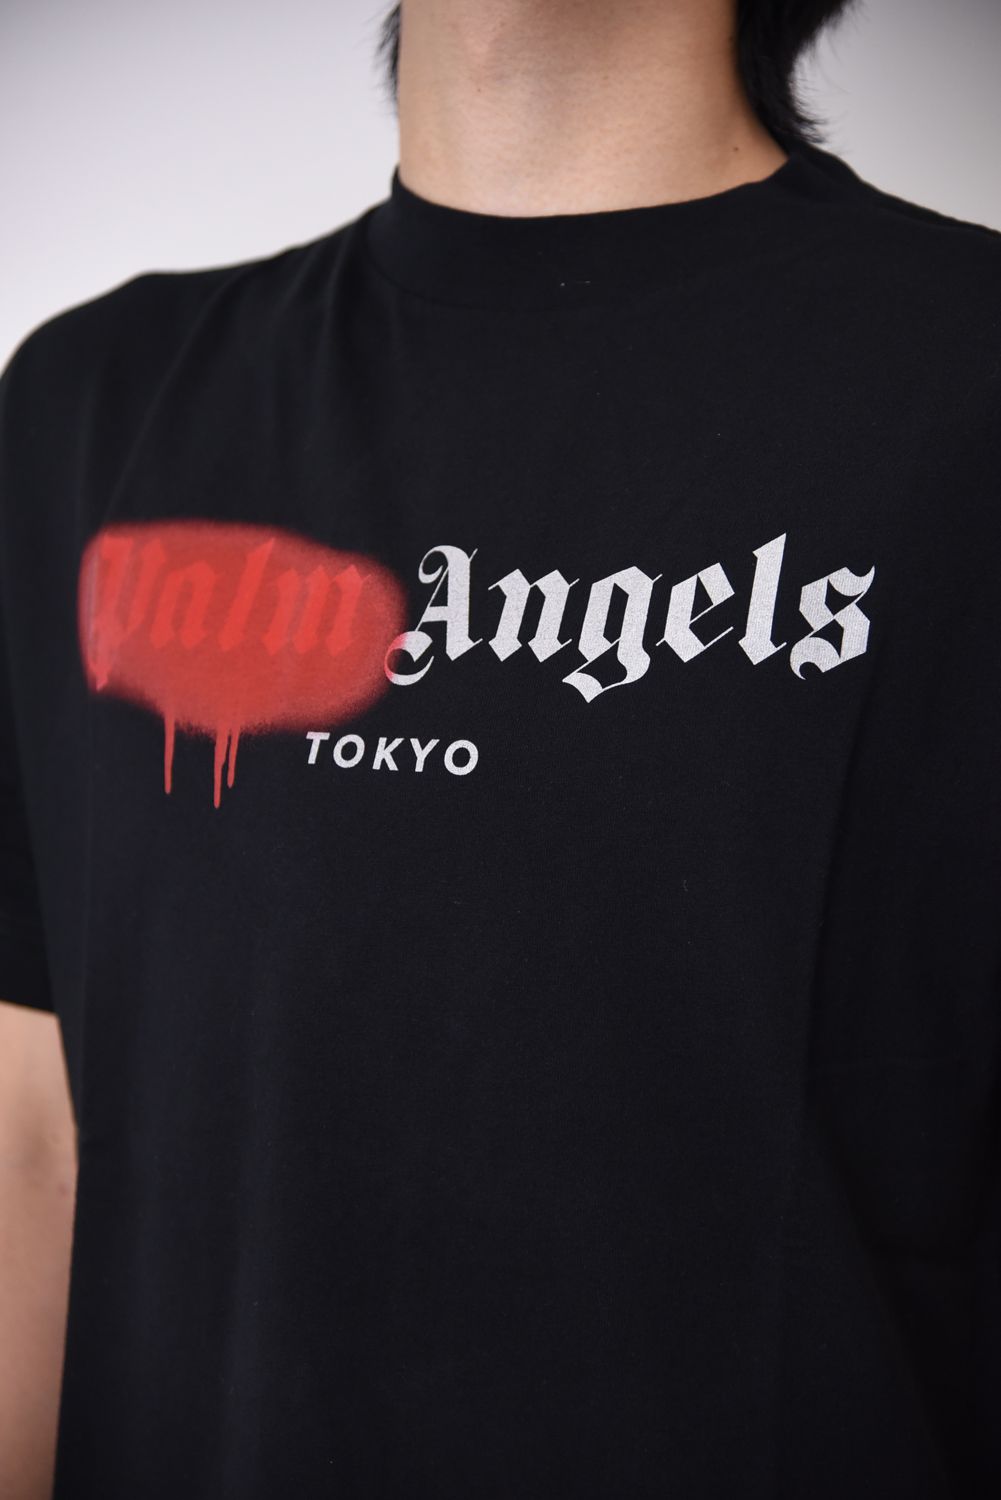 TOKYO SPRAYED LOGO T-SHIRT / ロゴプリント スプレー クルーネックTシャツ ブラック - S